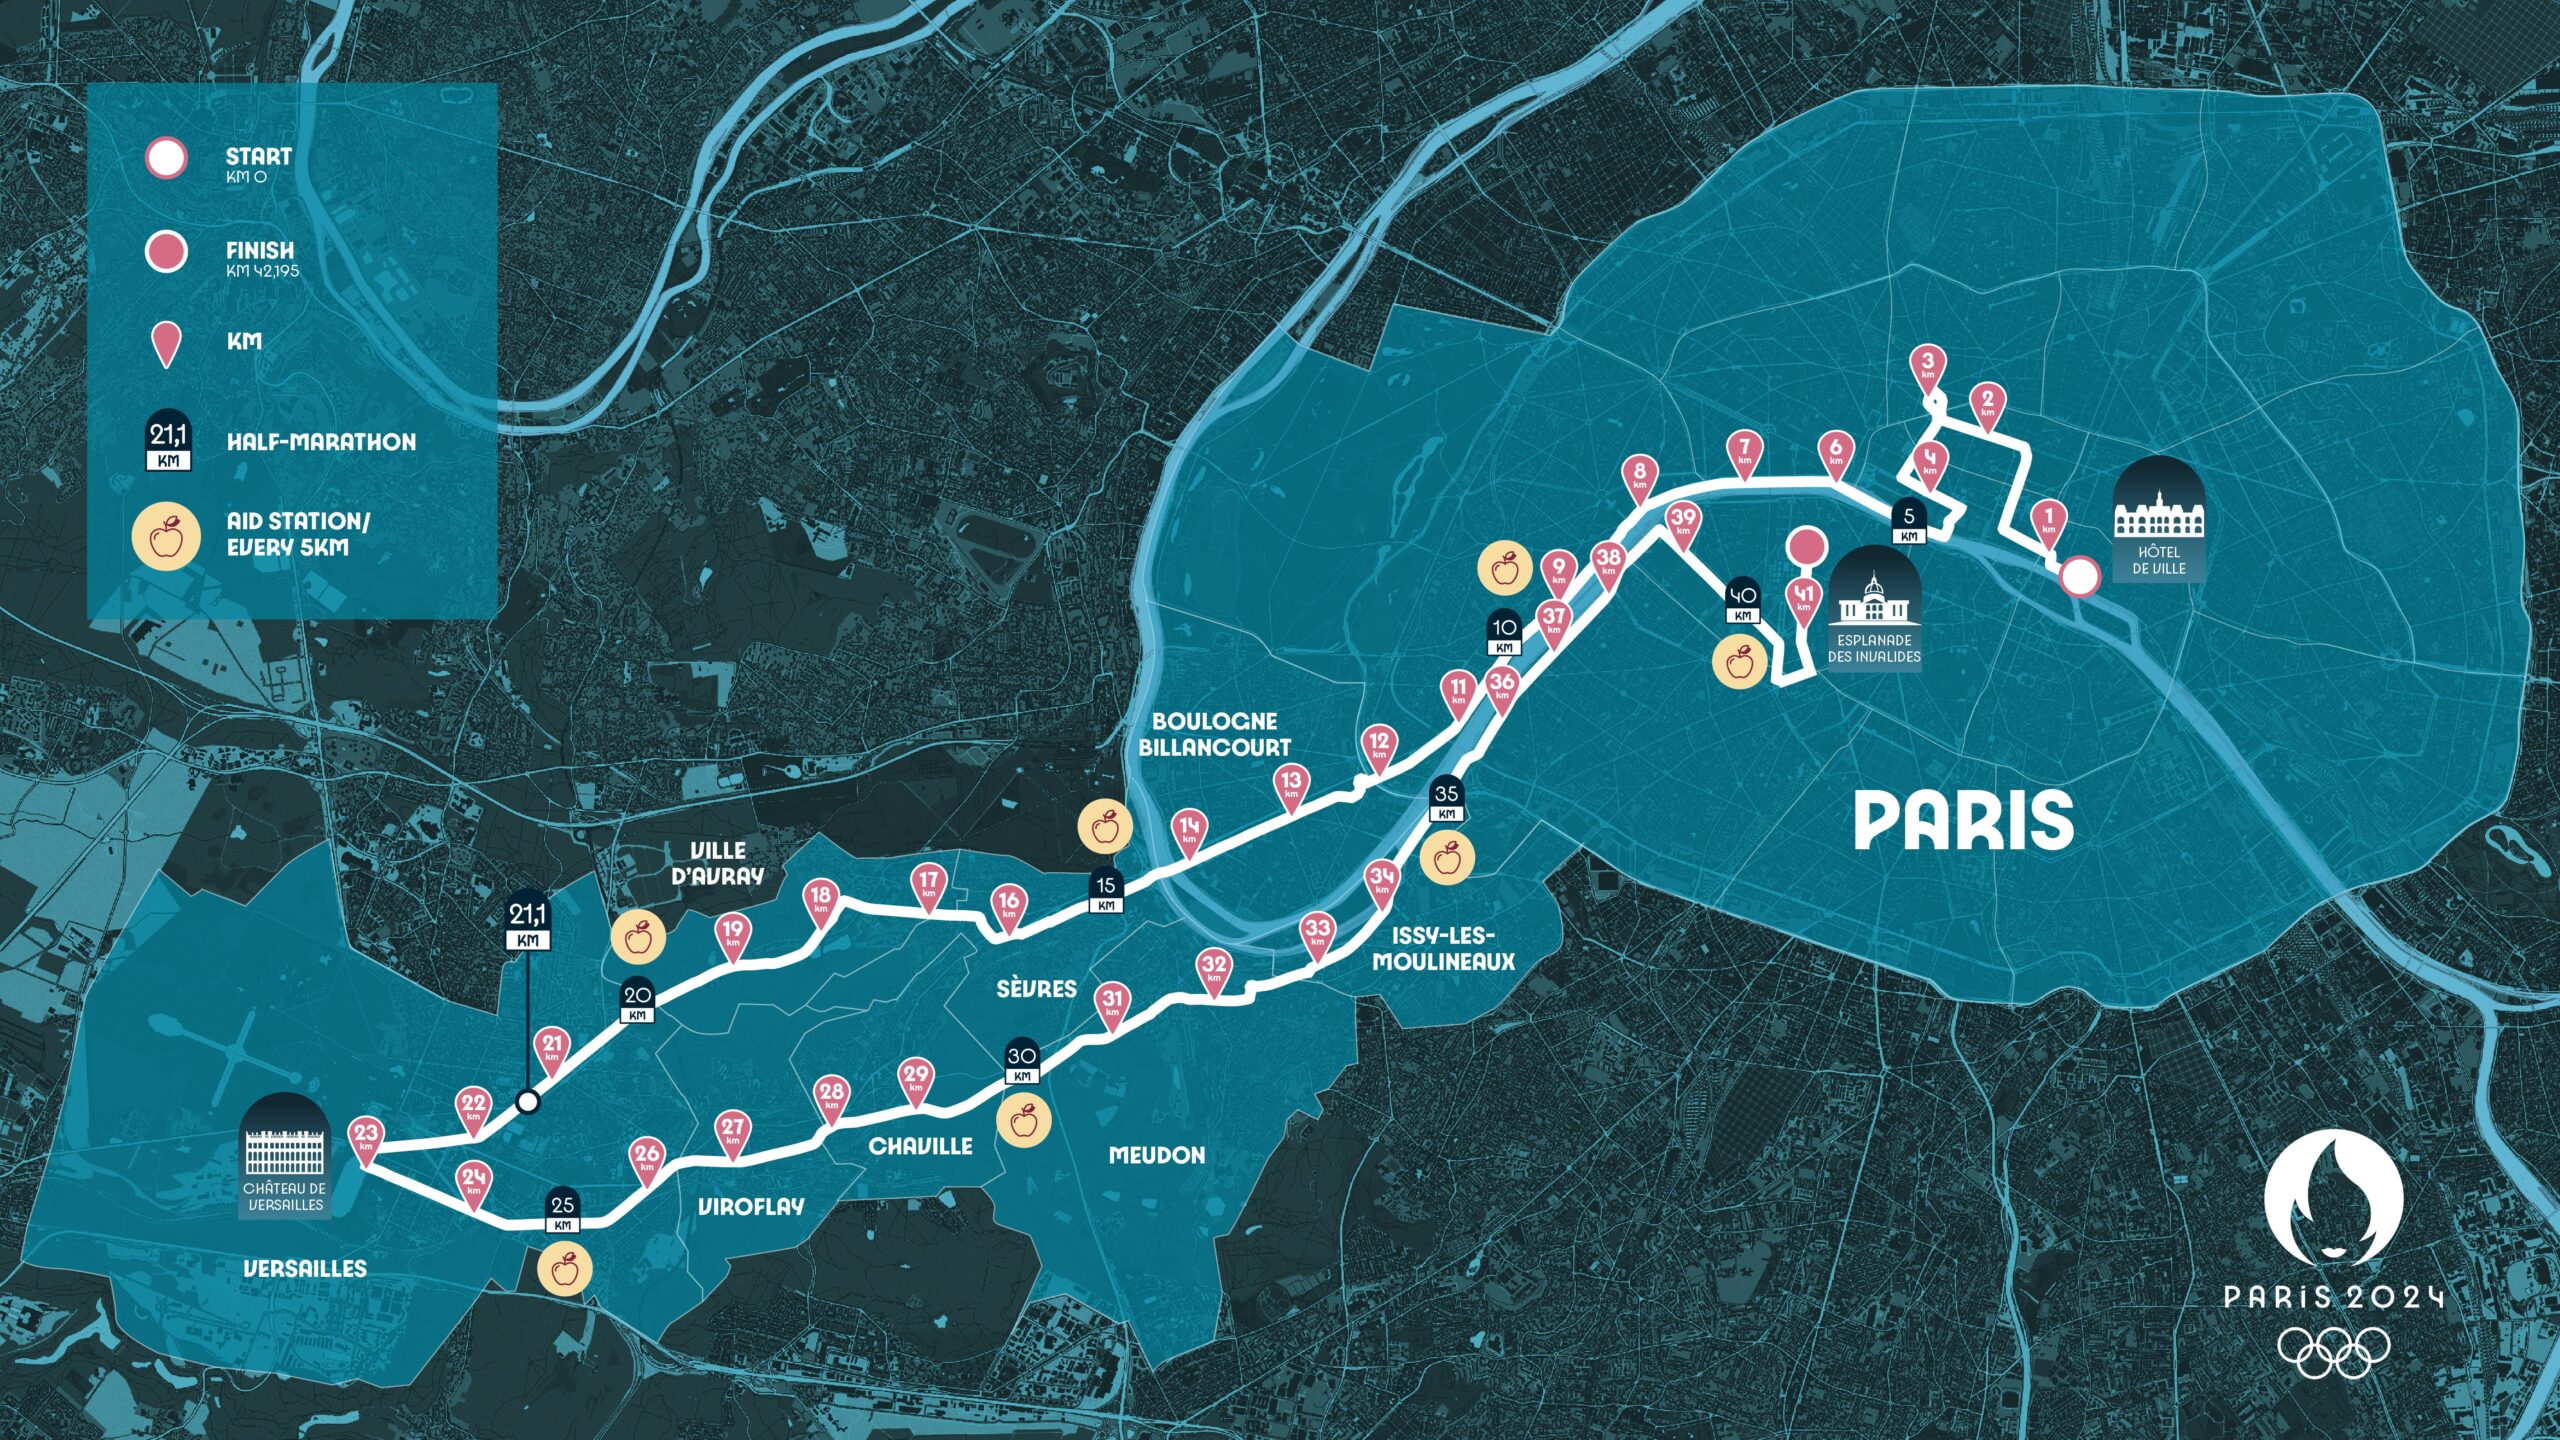 Paris 2024 Olympic marathon route confirmed